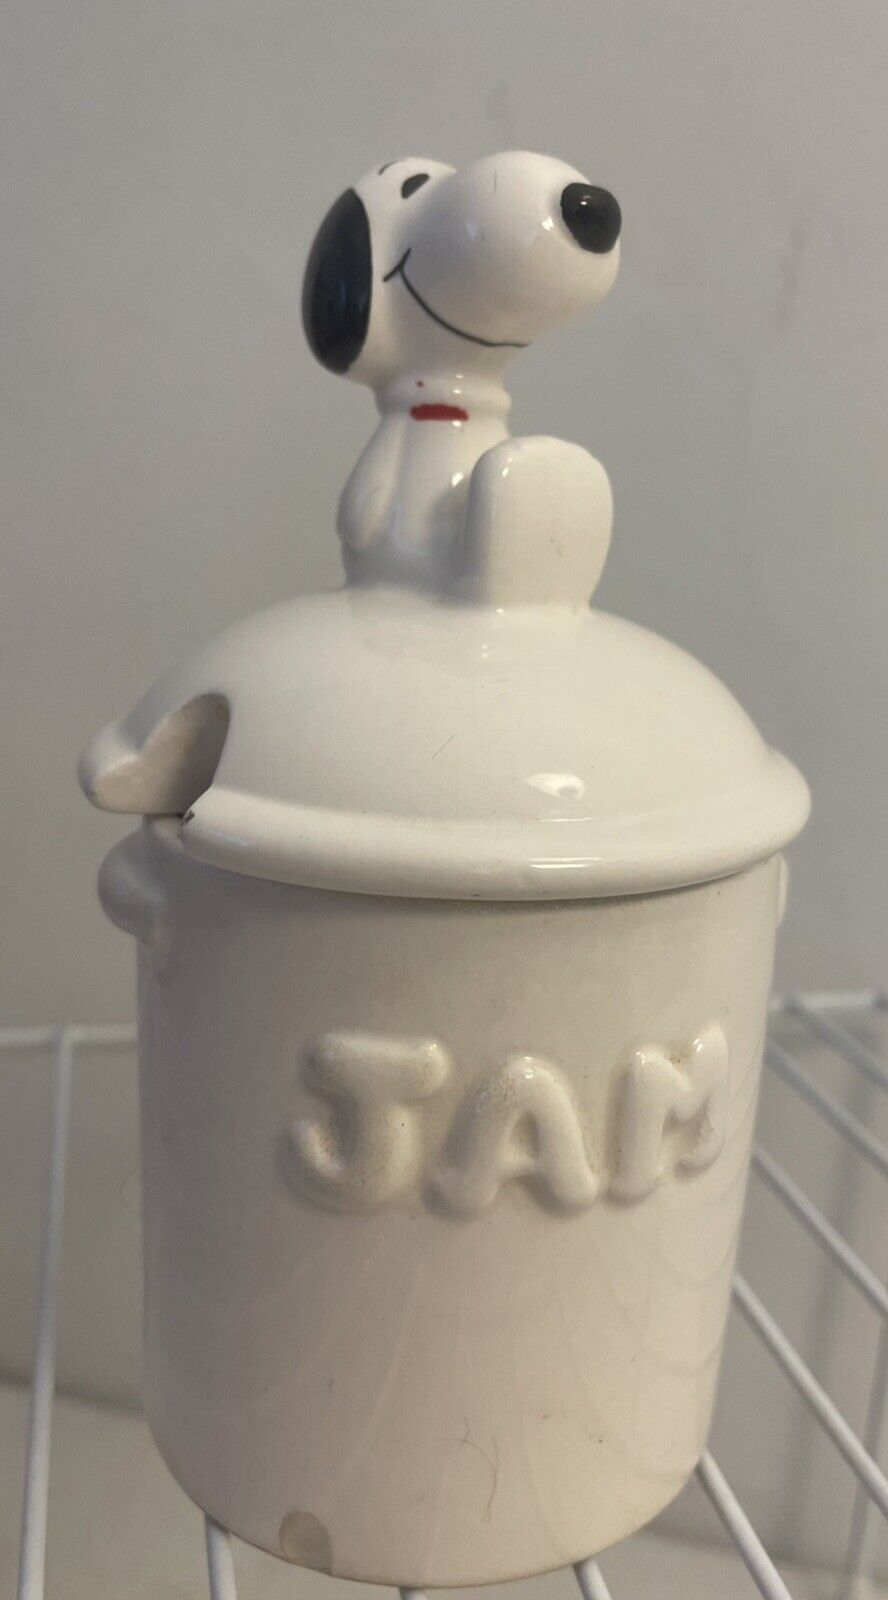 1966 Vintage Ceramic Snoopy Jam Jar Spoonless Precious Peanut Gang Favorite